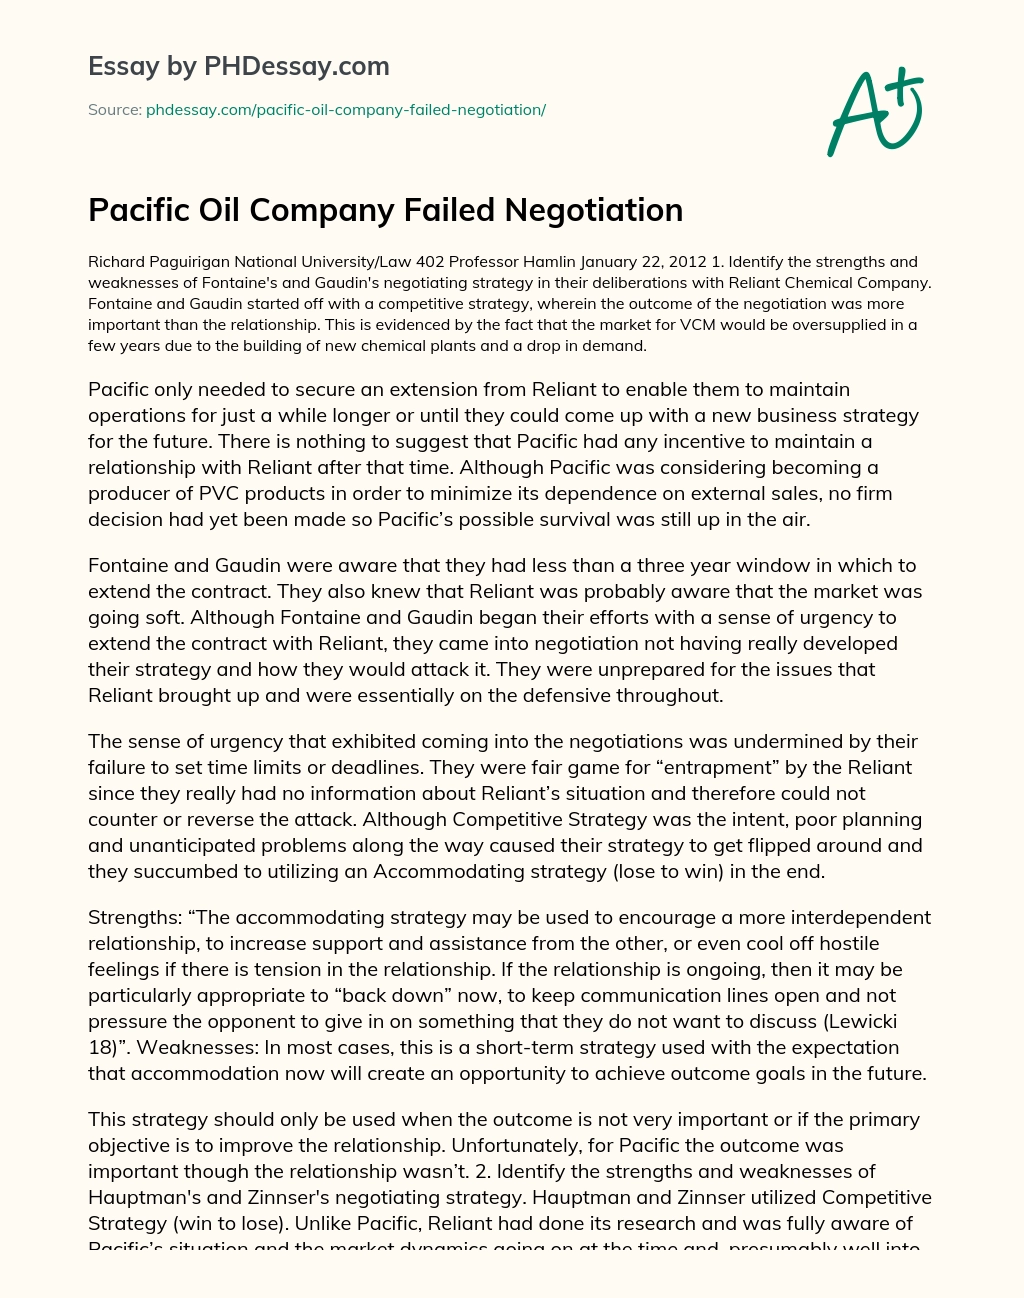 Pacific Oil Company Failed Negotiation essay